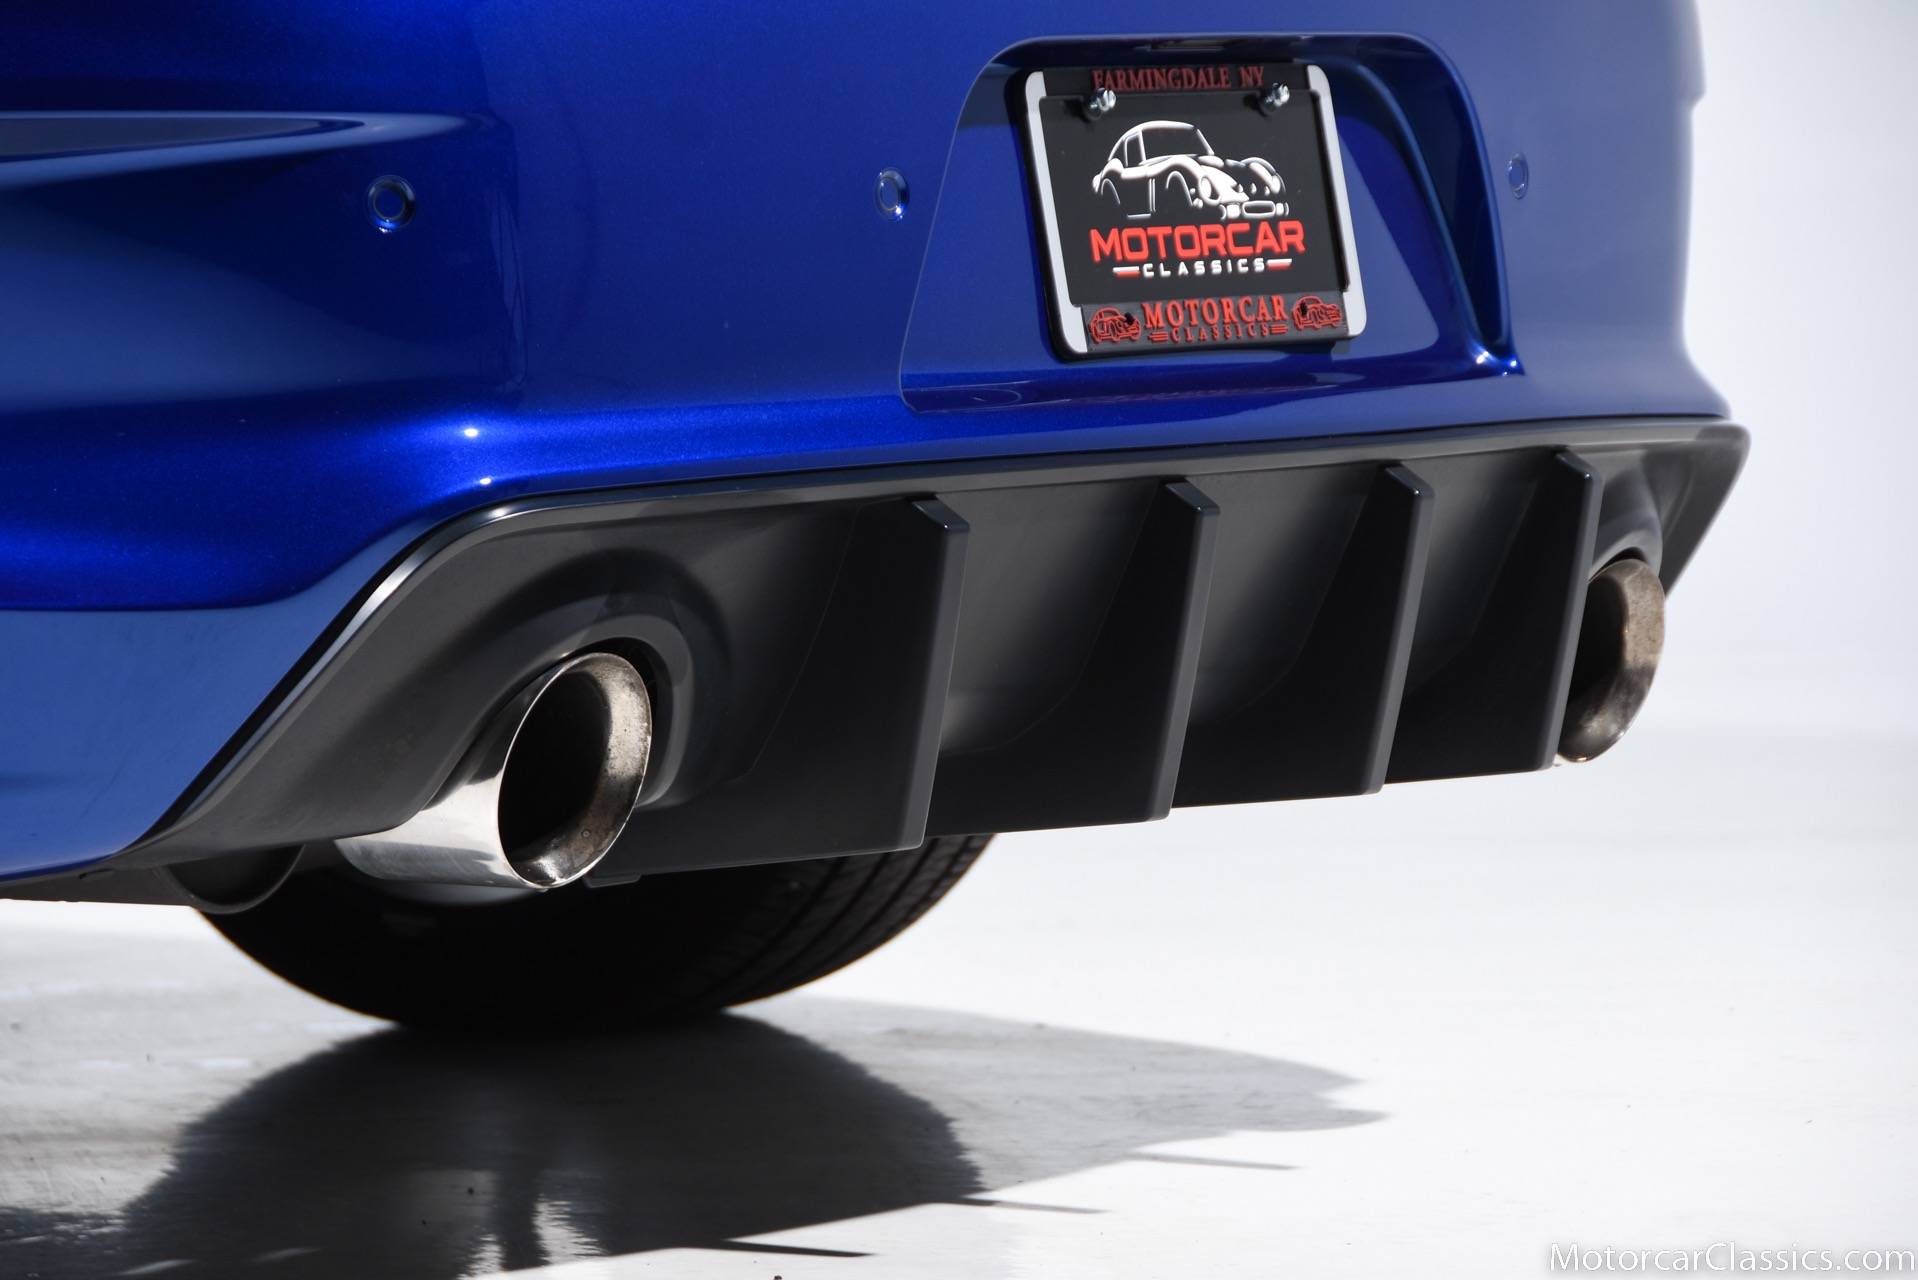 2022 Dodge Charger SRT Hellcat Redeye Widebody